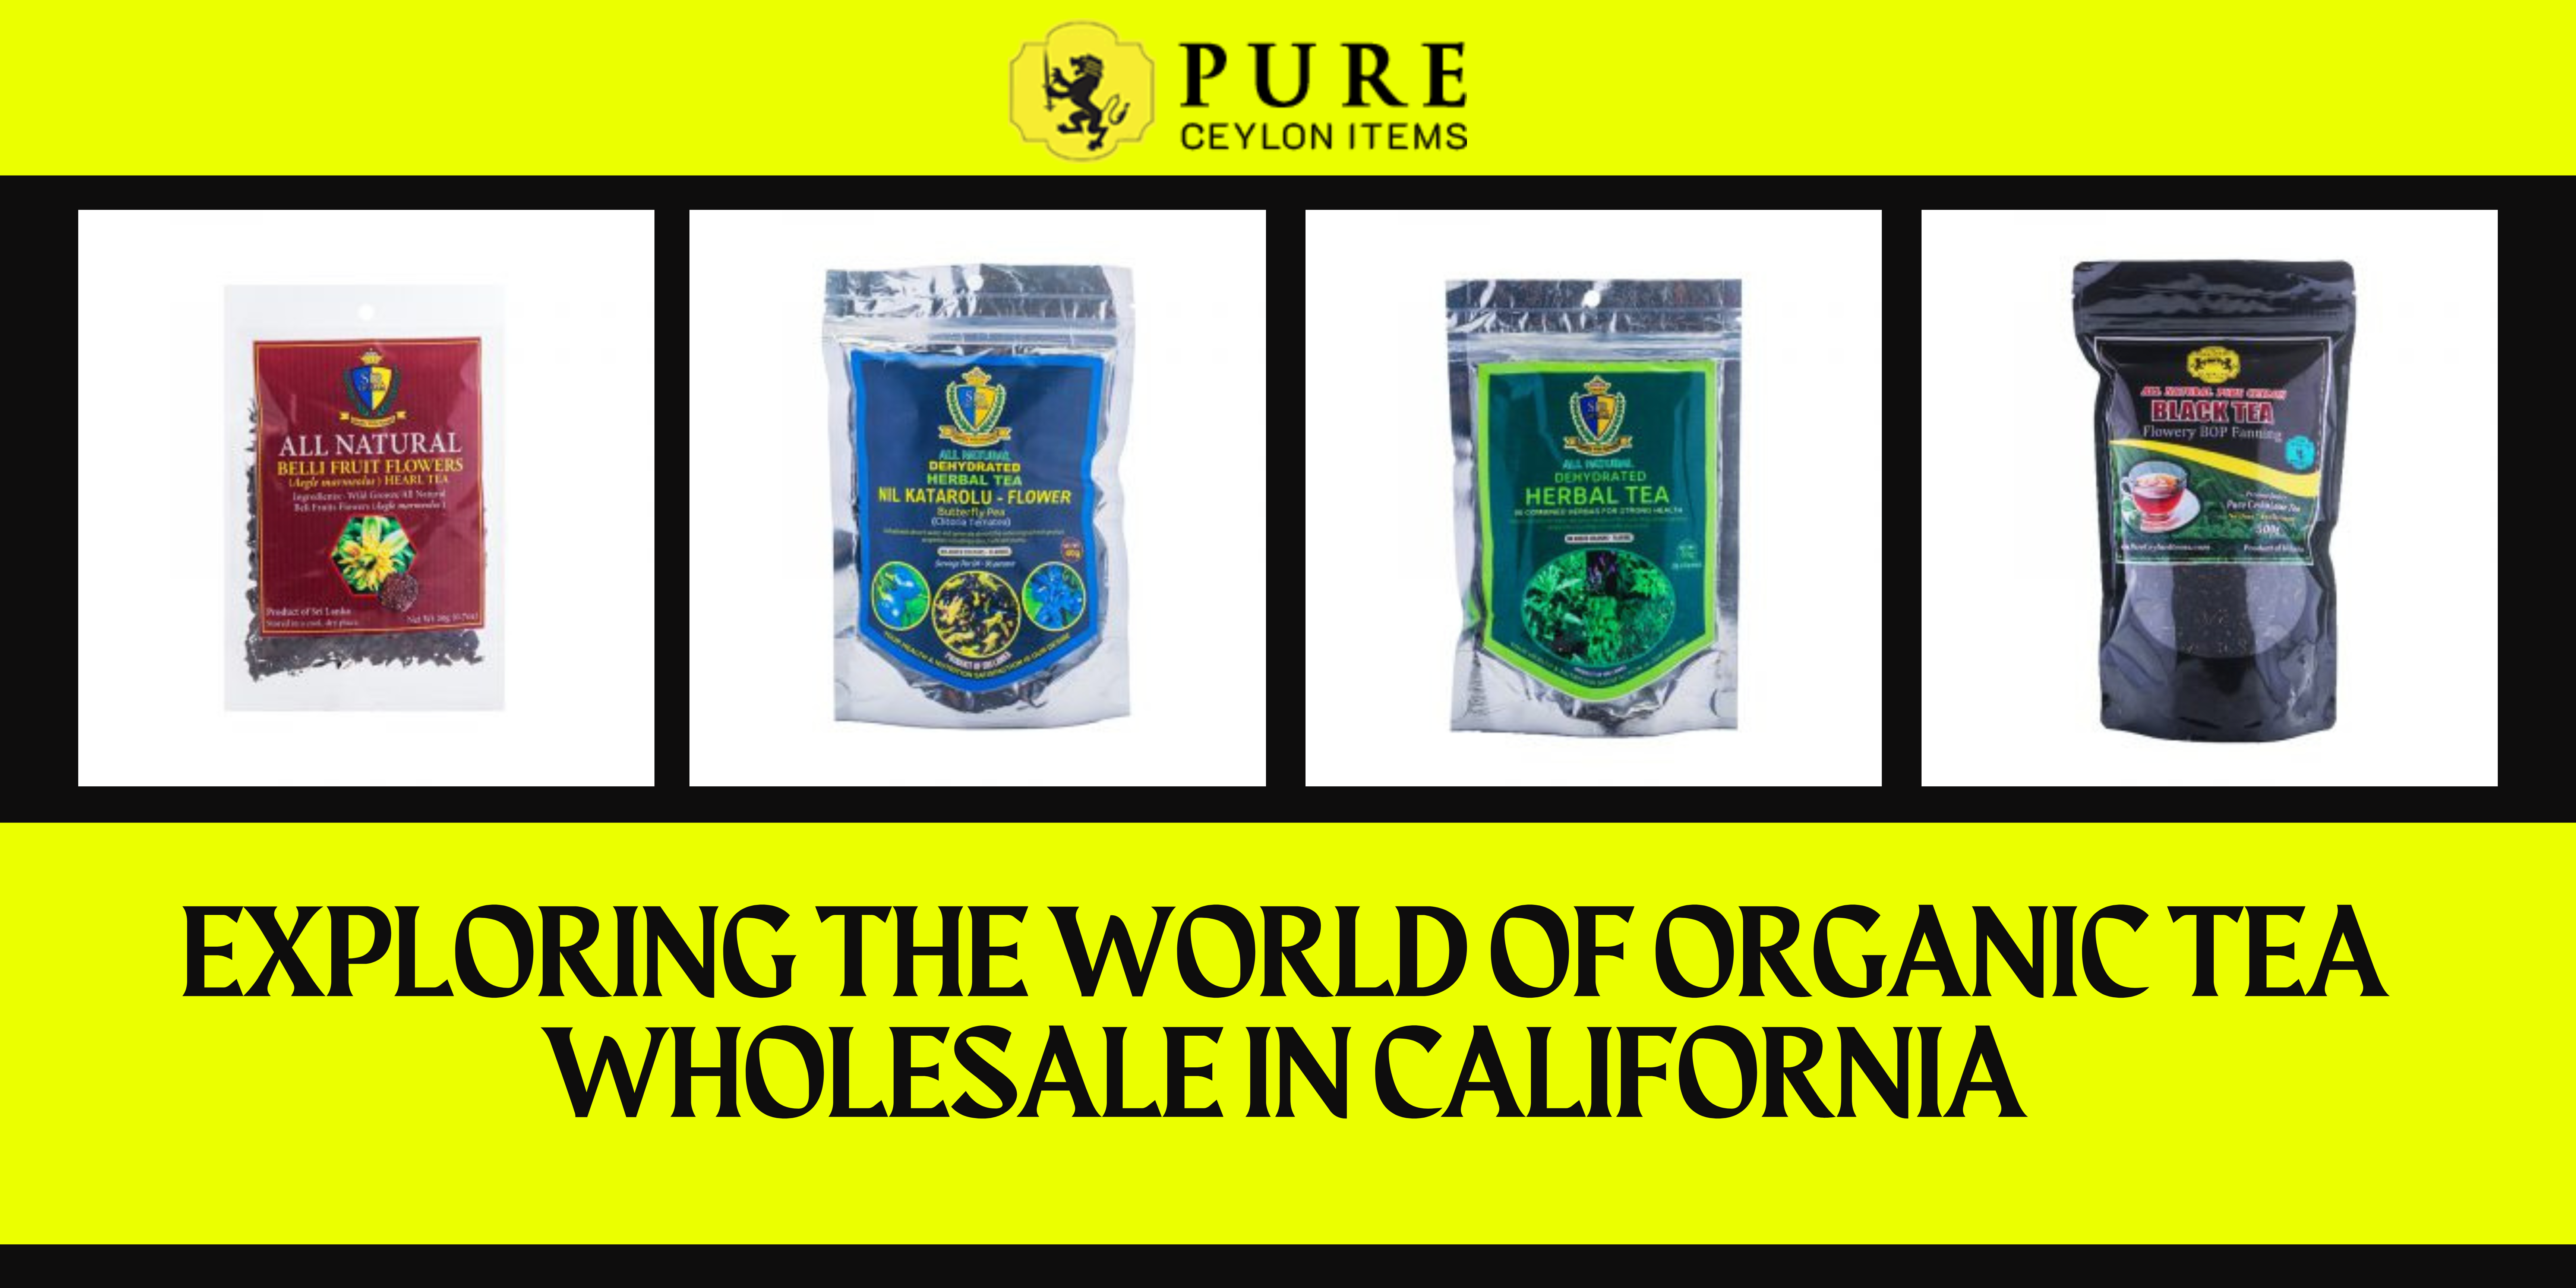 Organic Tea Wholesale California